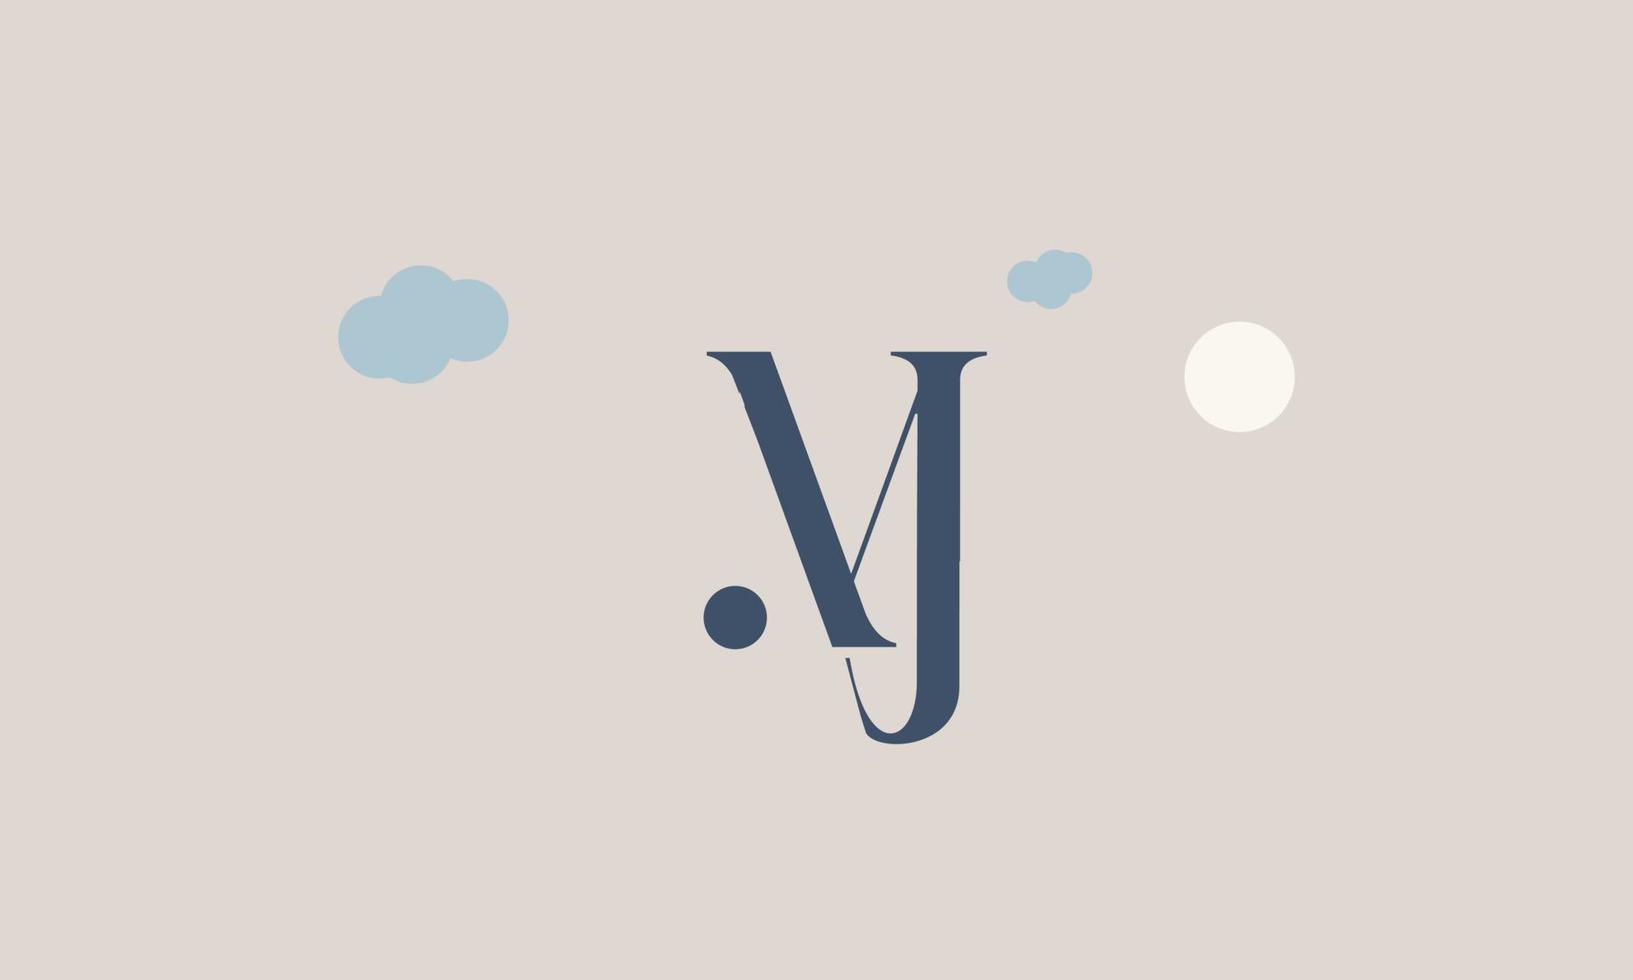 Alphabet letters Initials Monogram logo MJ, JM, M and J vector